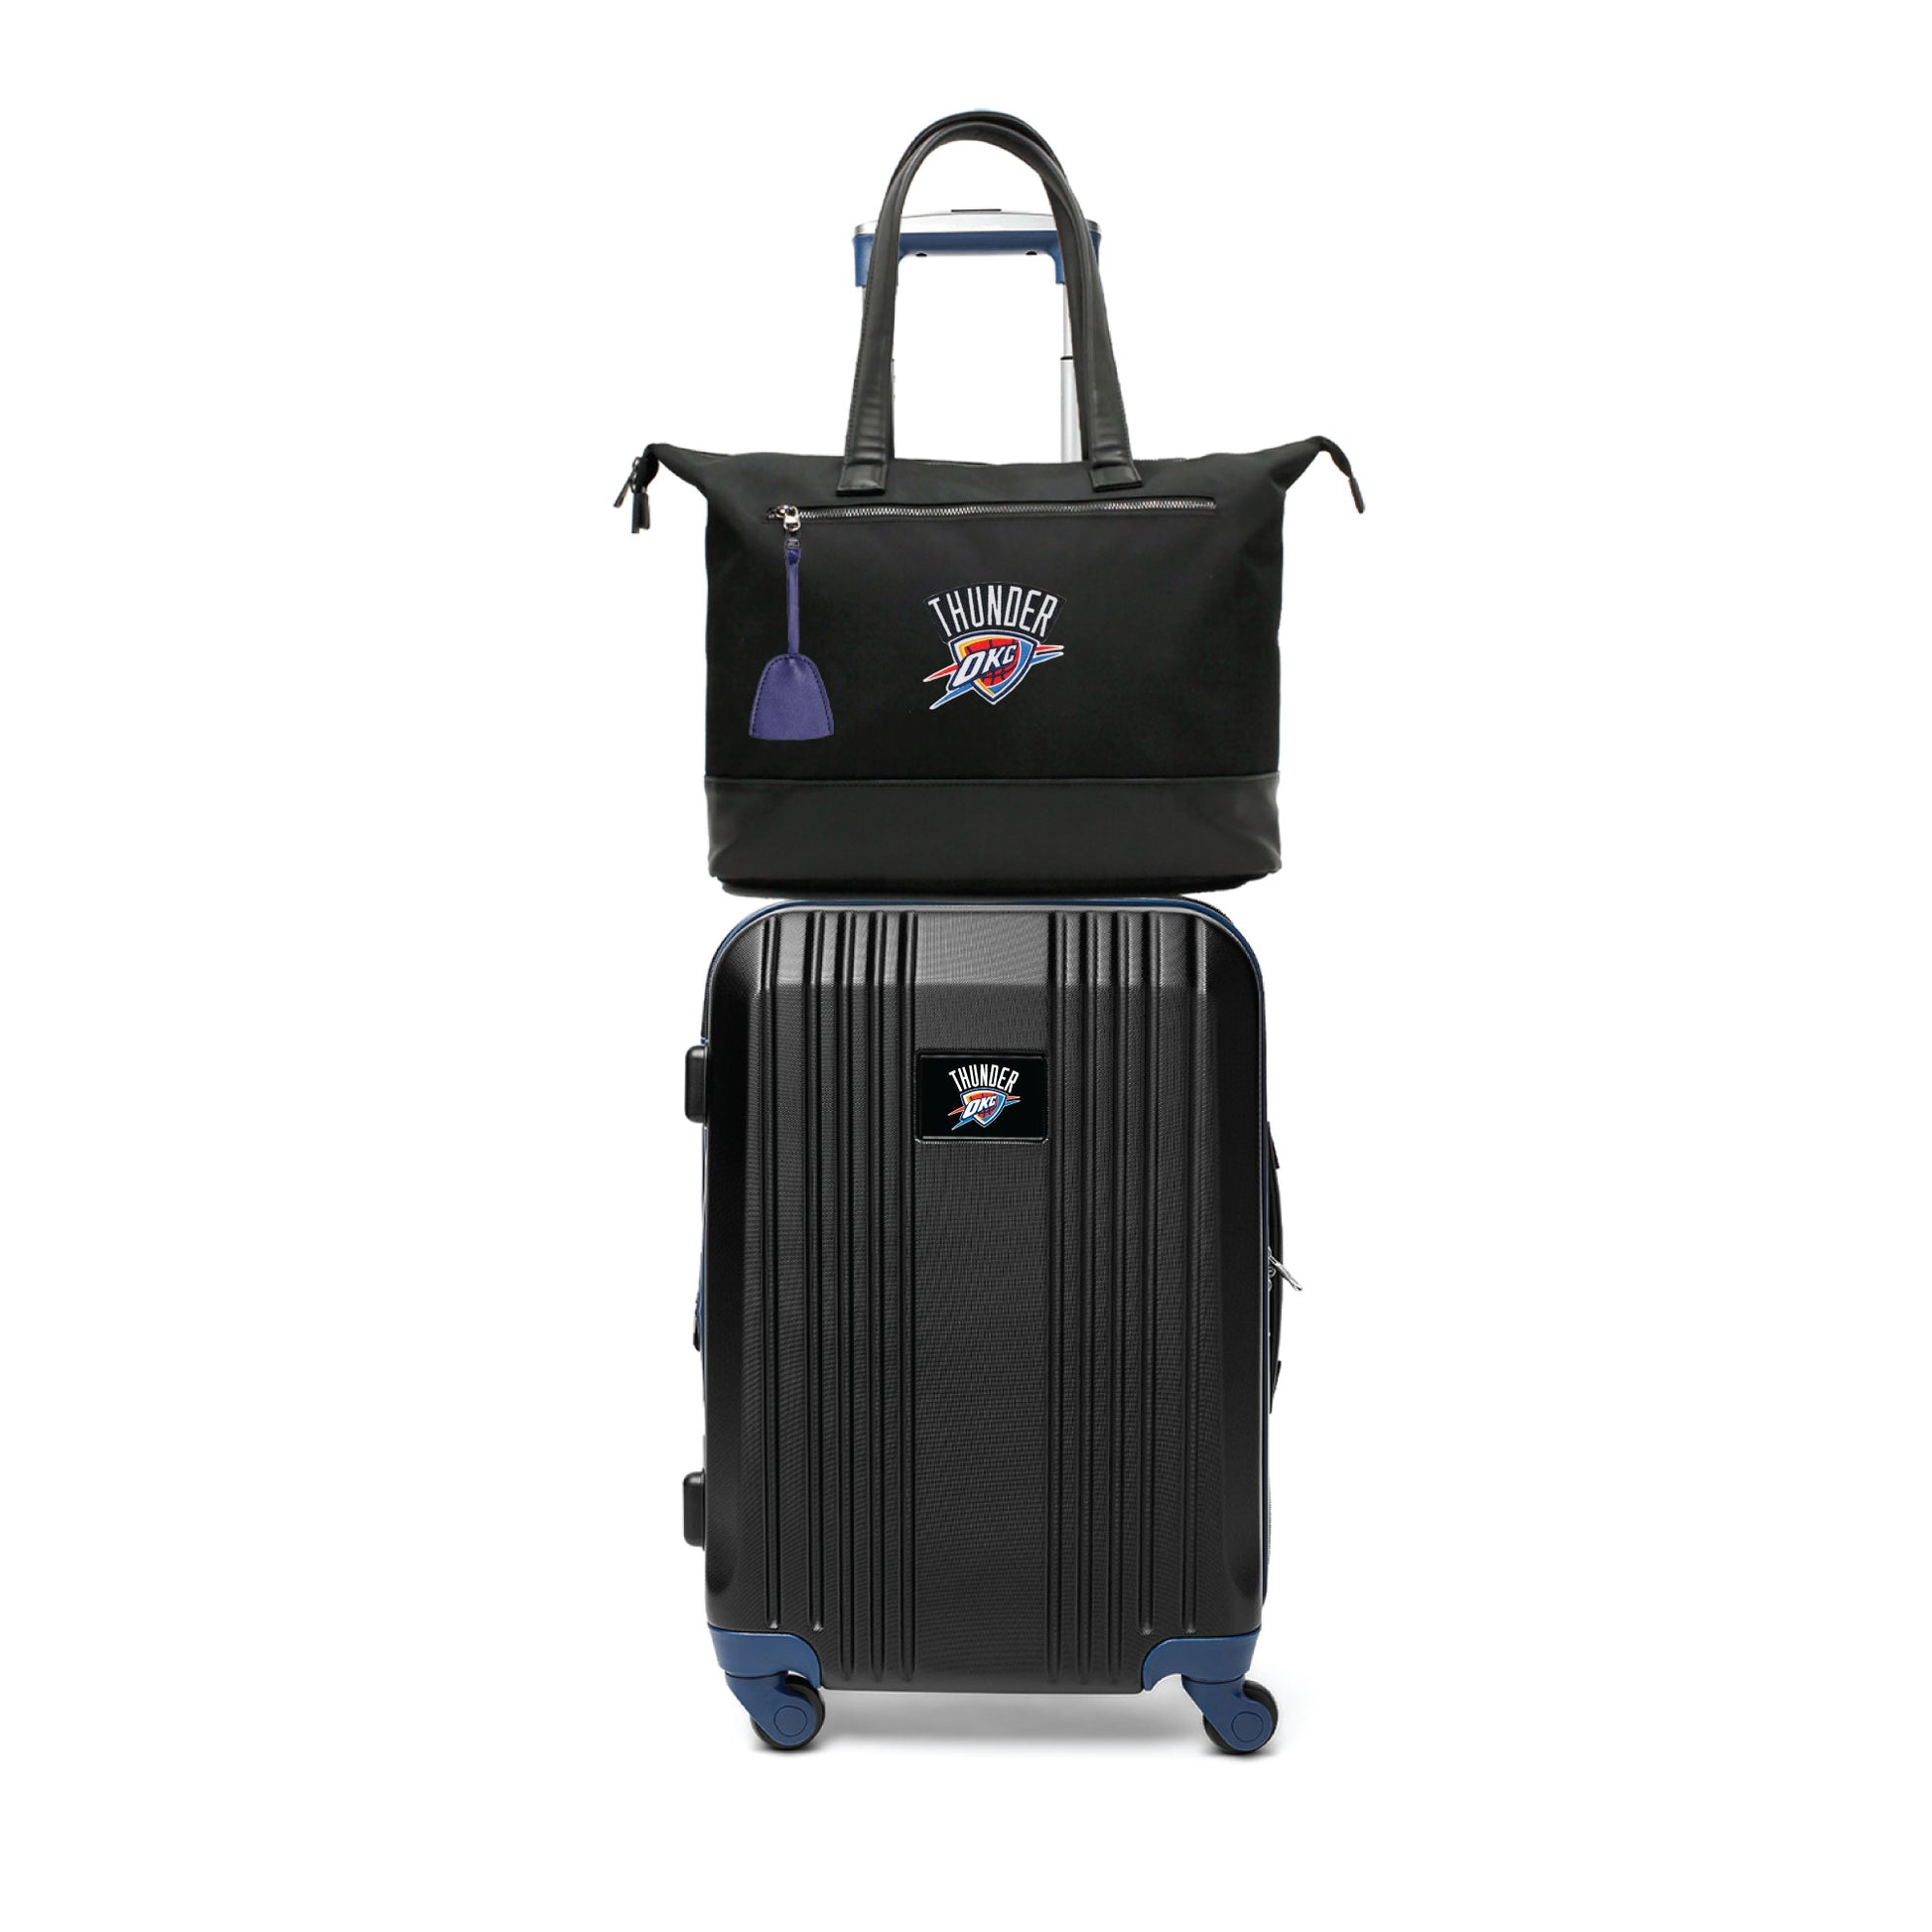 Oklahoma City Thunder Premium Laptop Tote Bag and Luggage Set